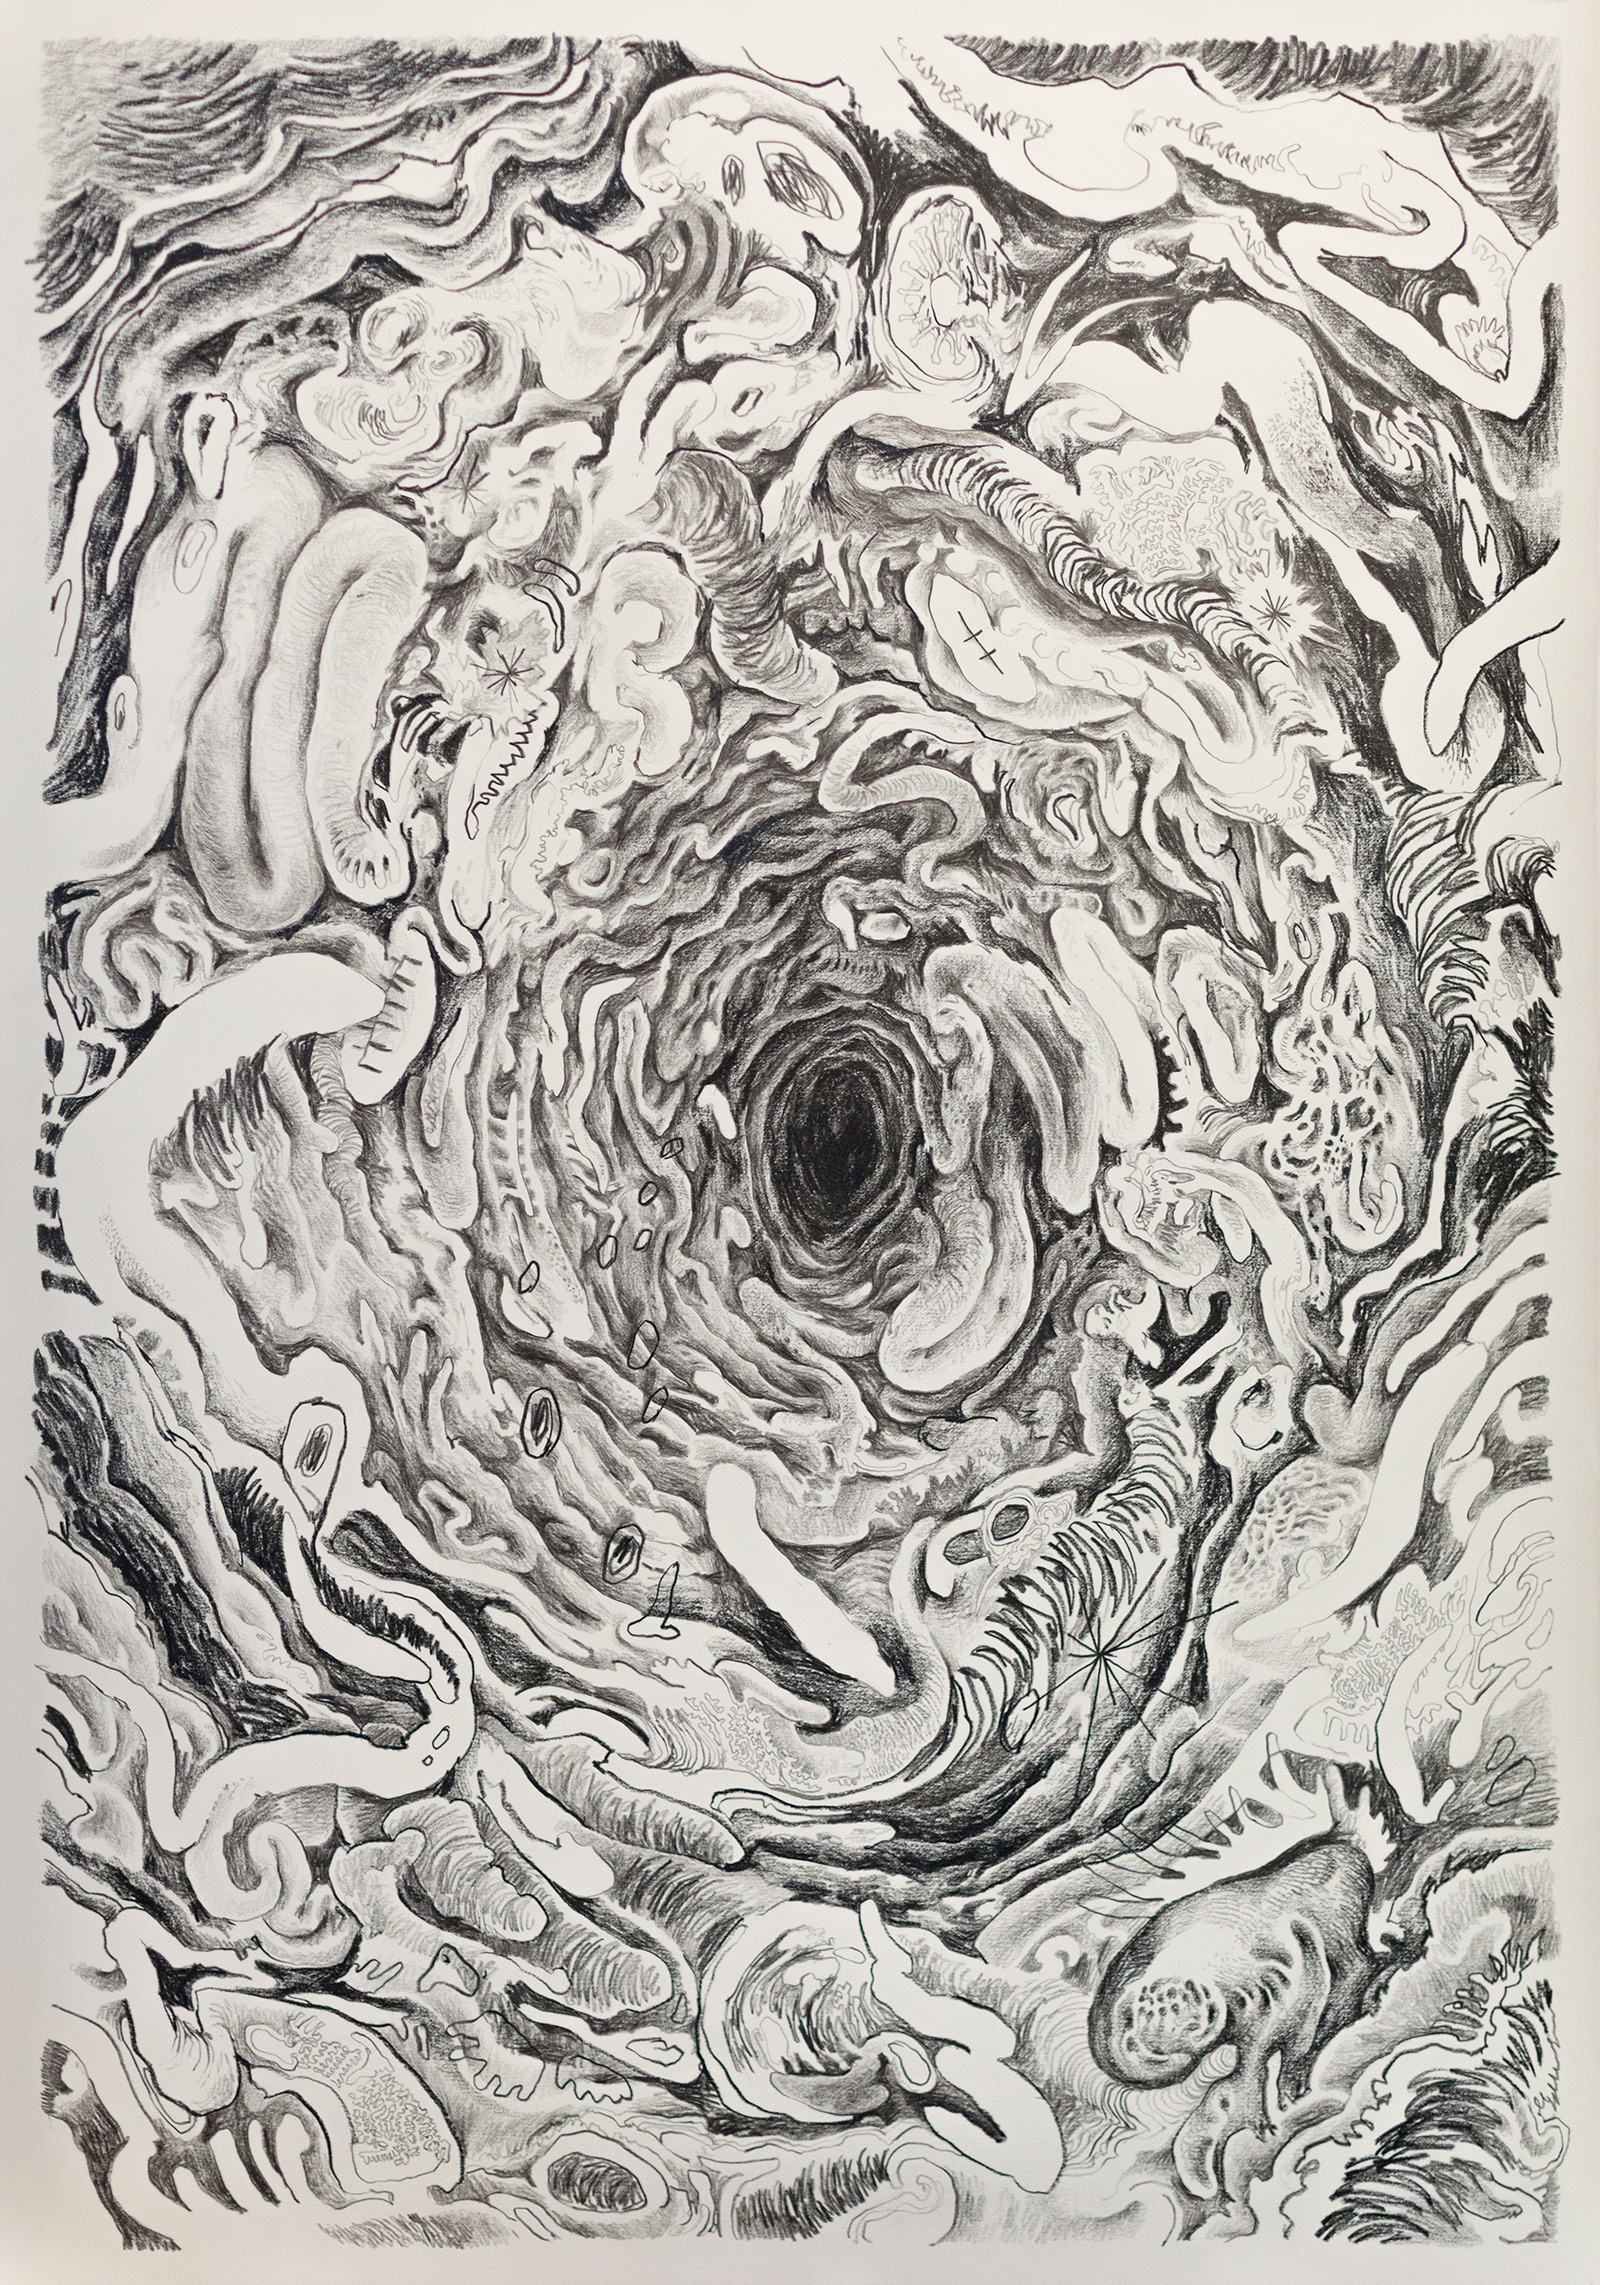 A Life XIV, 2016 | 76cm x 106cm | Crayon on paper